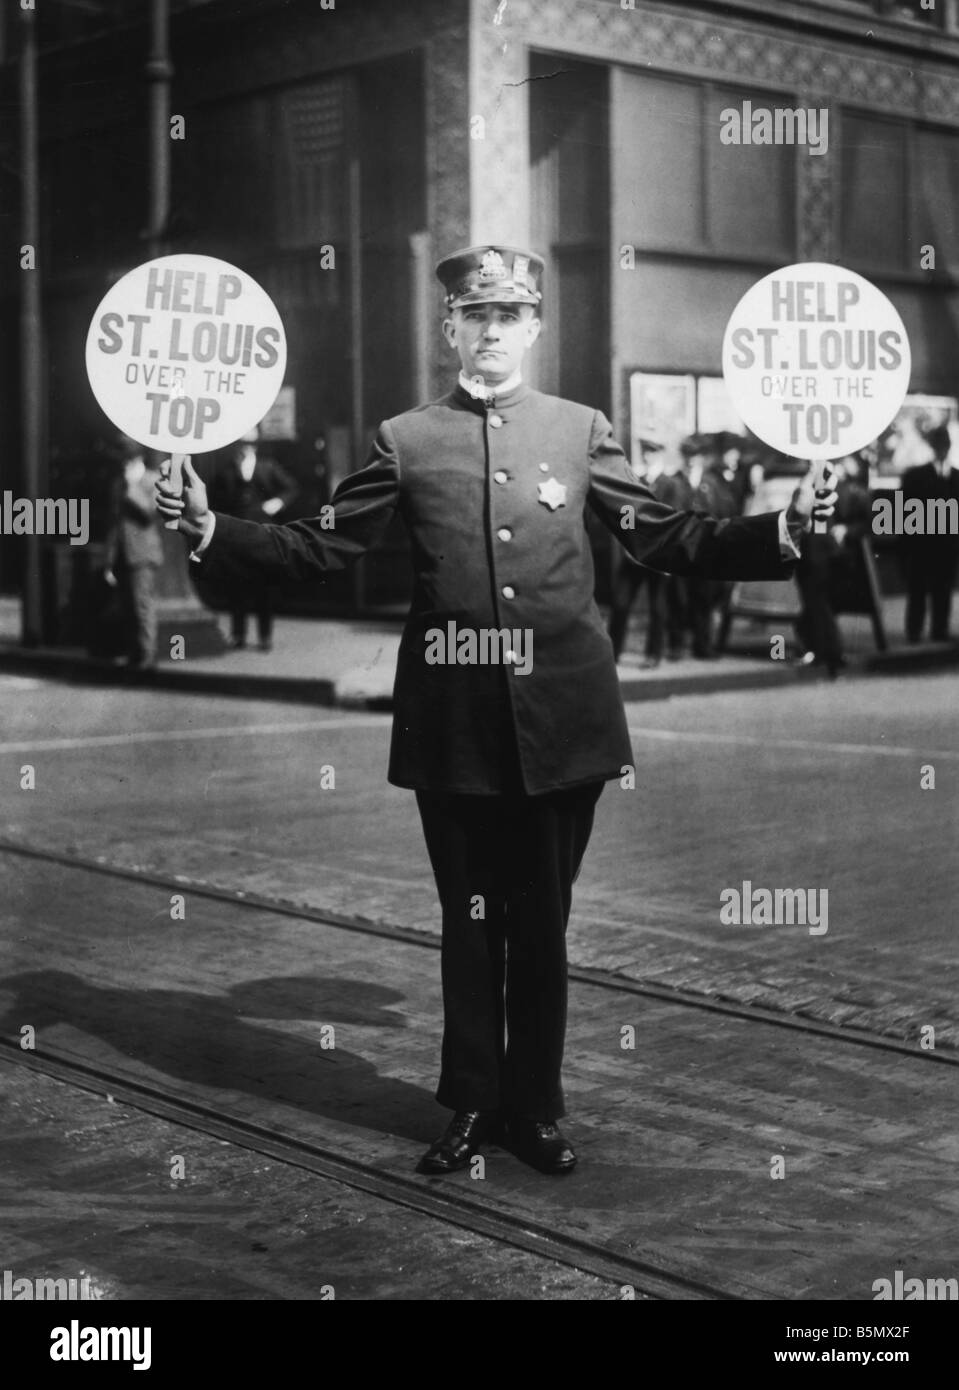 9US 1918 0 0 A7 1 WW1 Policeman advertises 4th War loan World War 1 USA 1917 18 Traffic policeman controls the traffic in St Lou Stock Photo